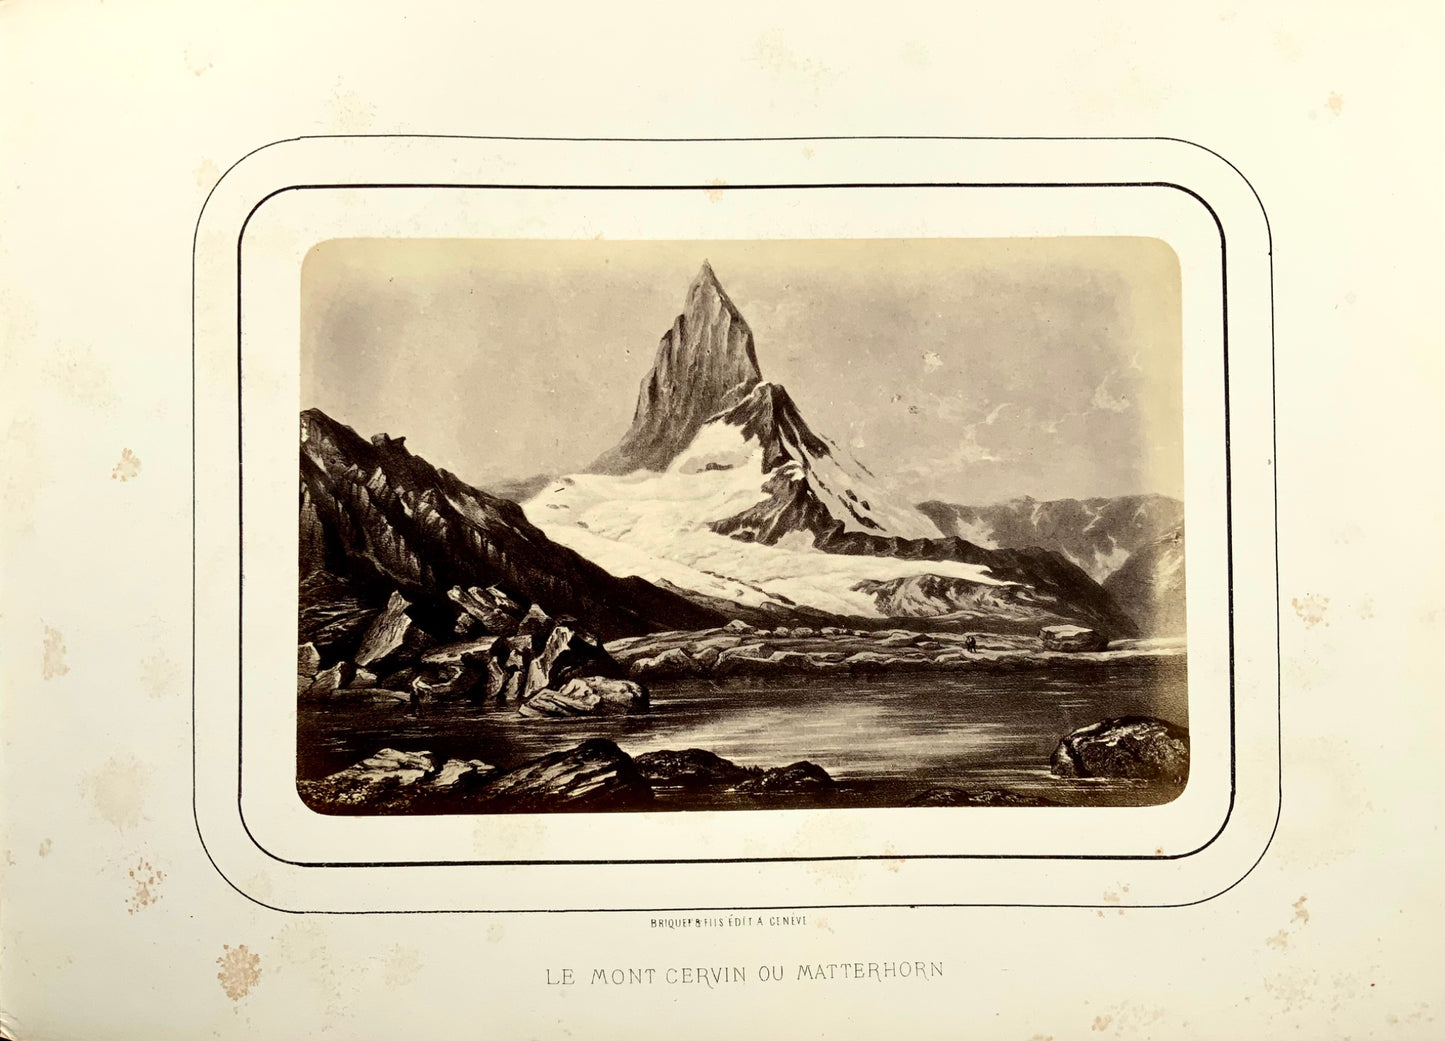 1865c. Switzerland [Briquet et fils, Geneva] Album photographique de la Suisse